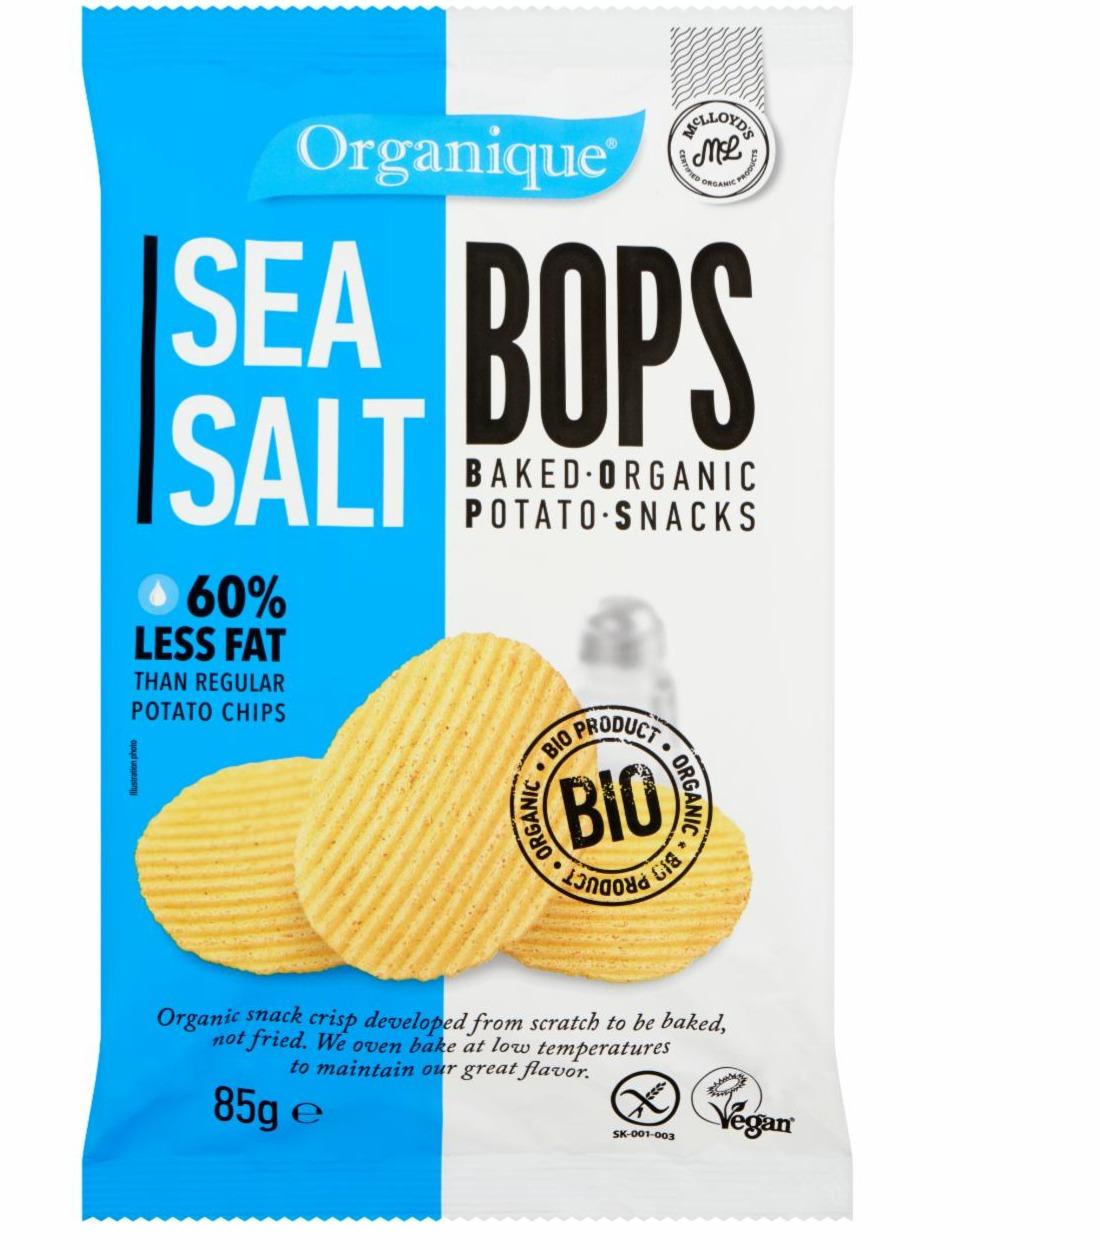 Fotografie - sea salt bops Organique